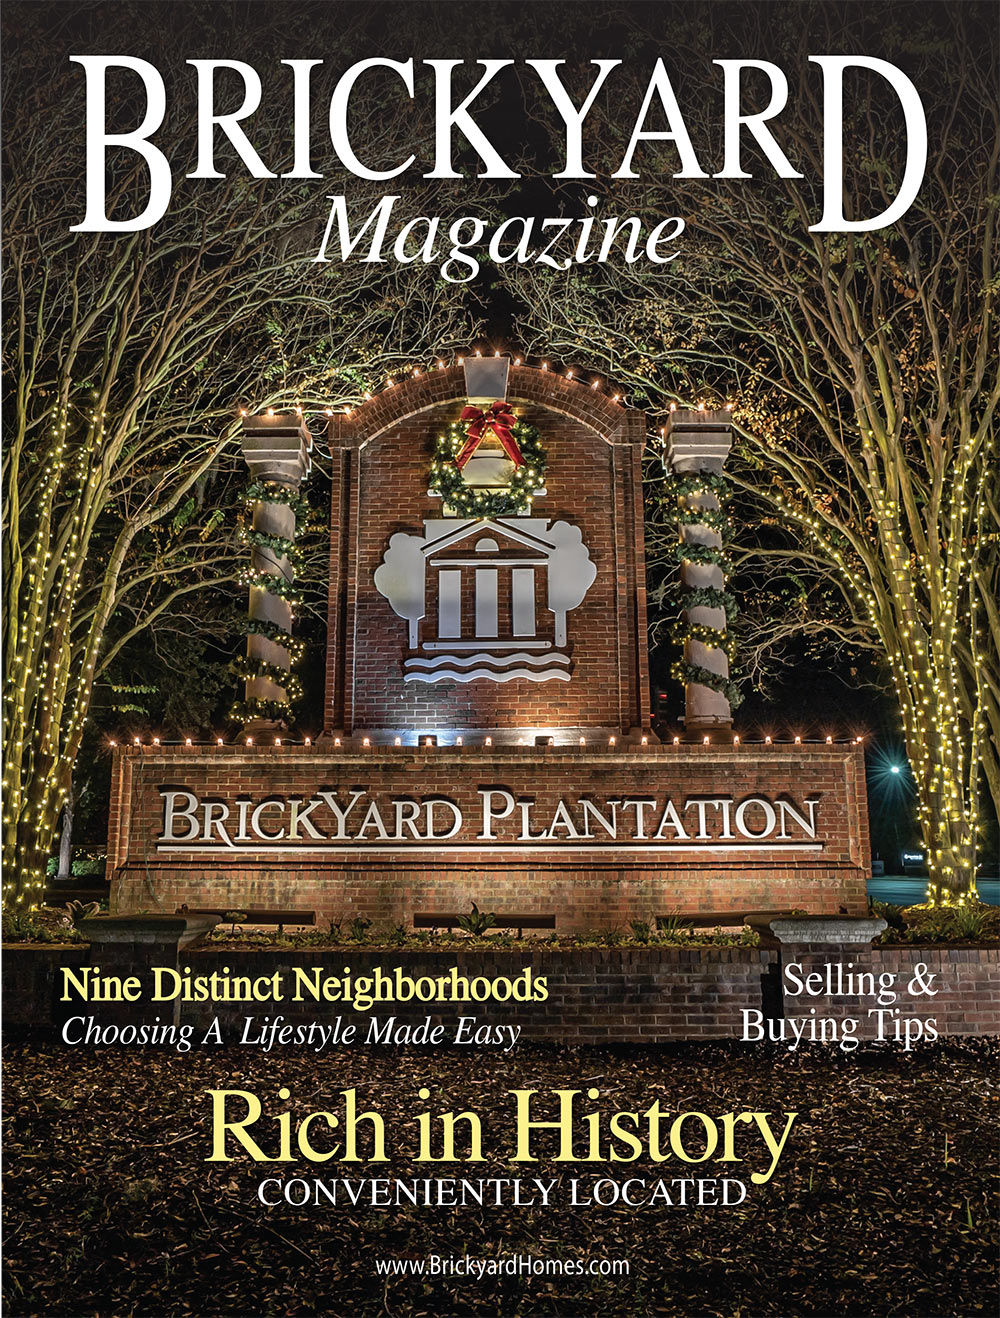 Brickyard Magazine